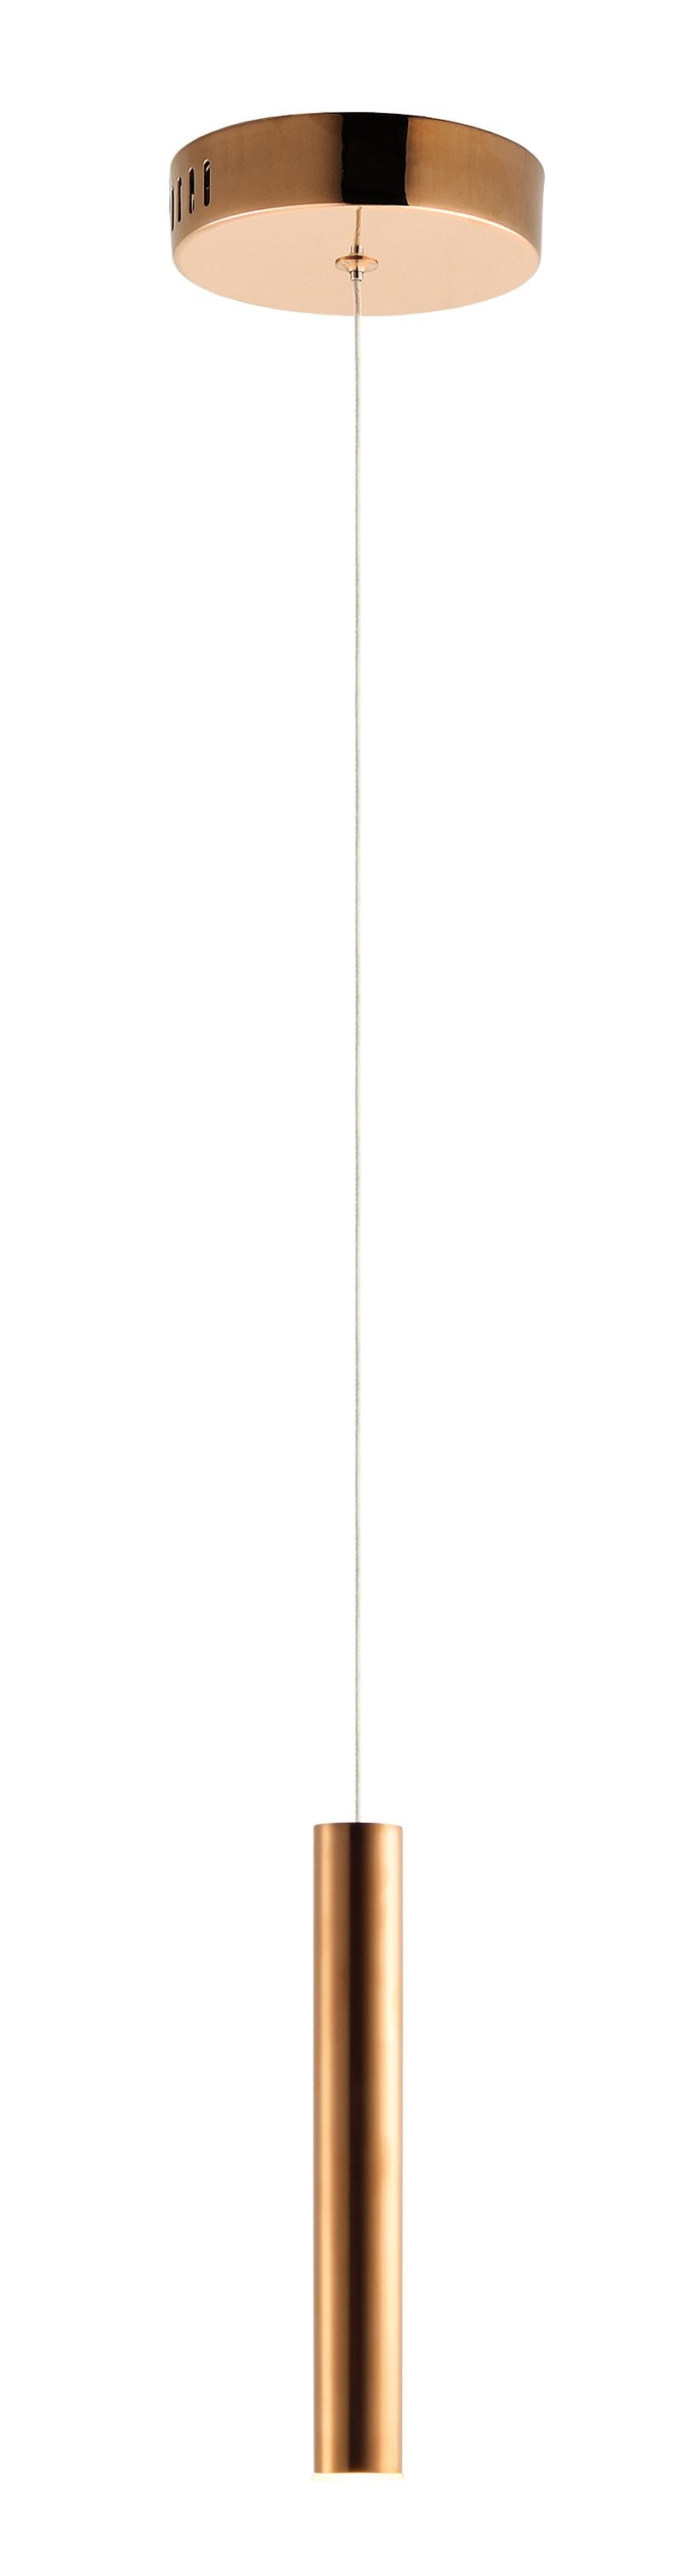 Flute 1.75' x 12' Single Light Mini-Pendant in Rose Gold